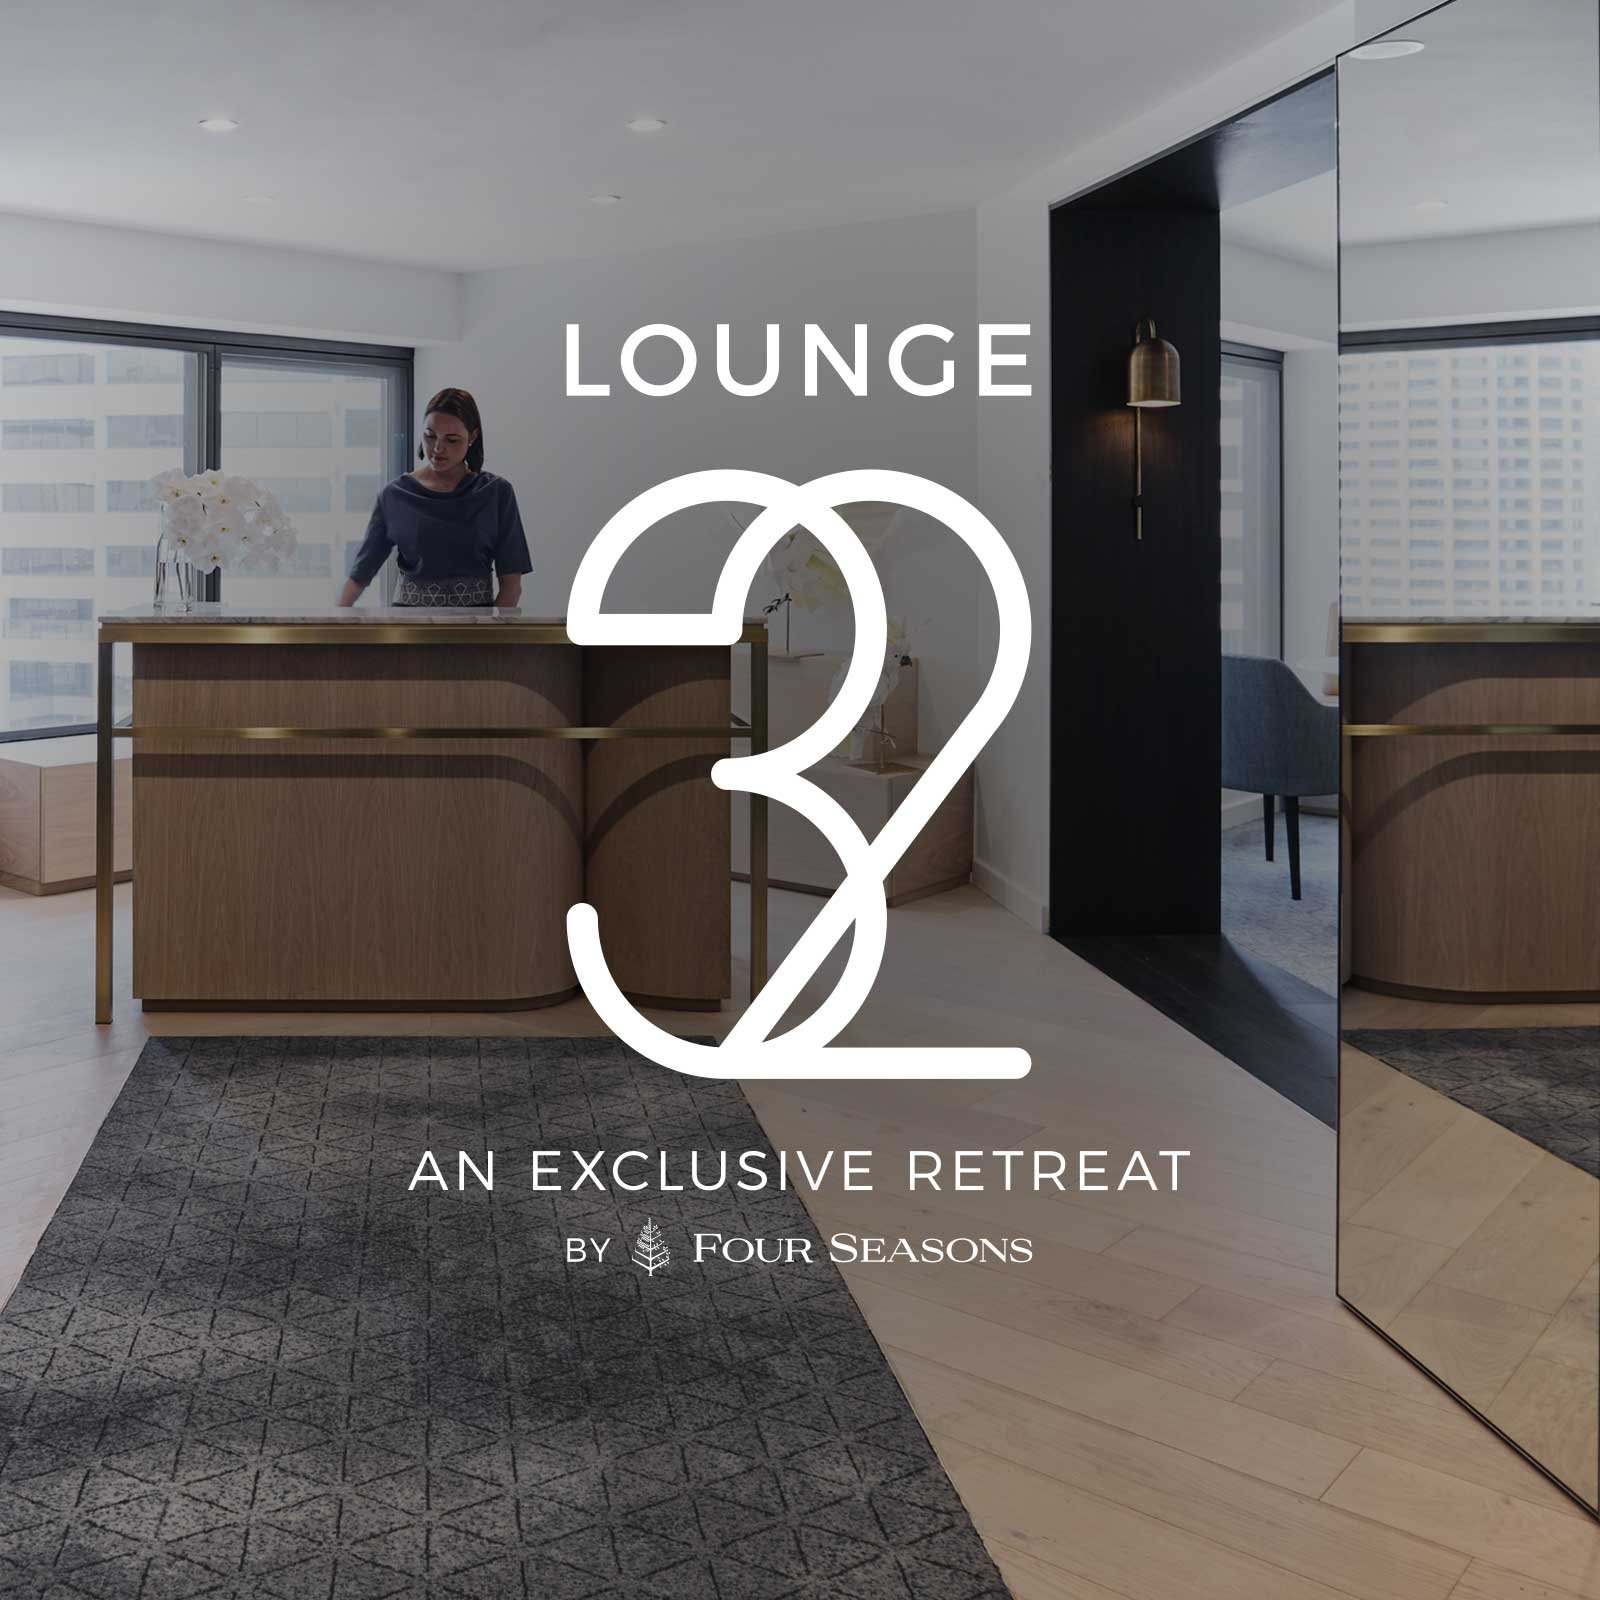 Taffy Design - Lounge 32 Four Seasons Hotel Sydney